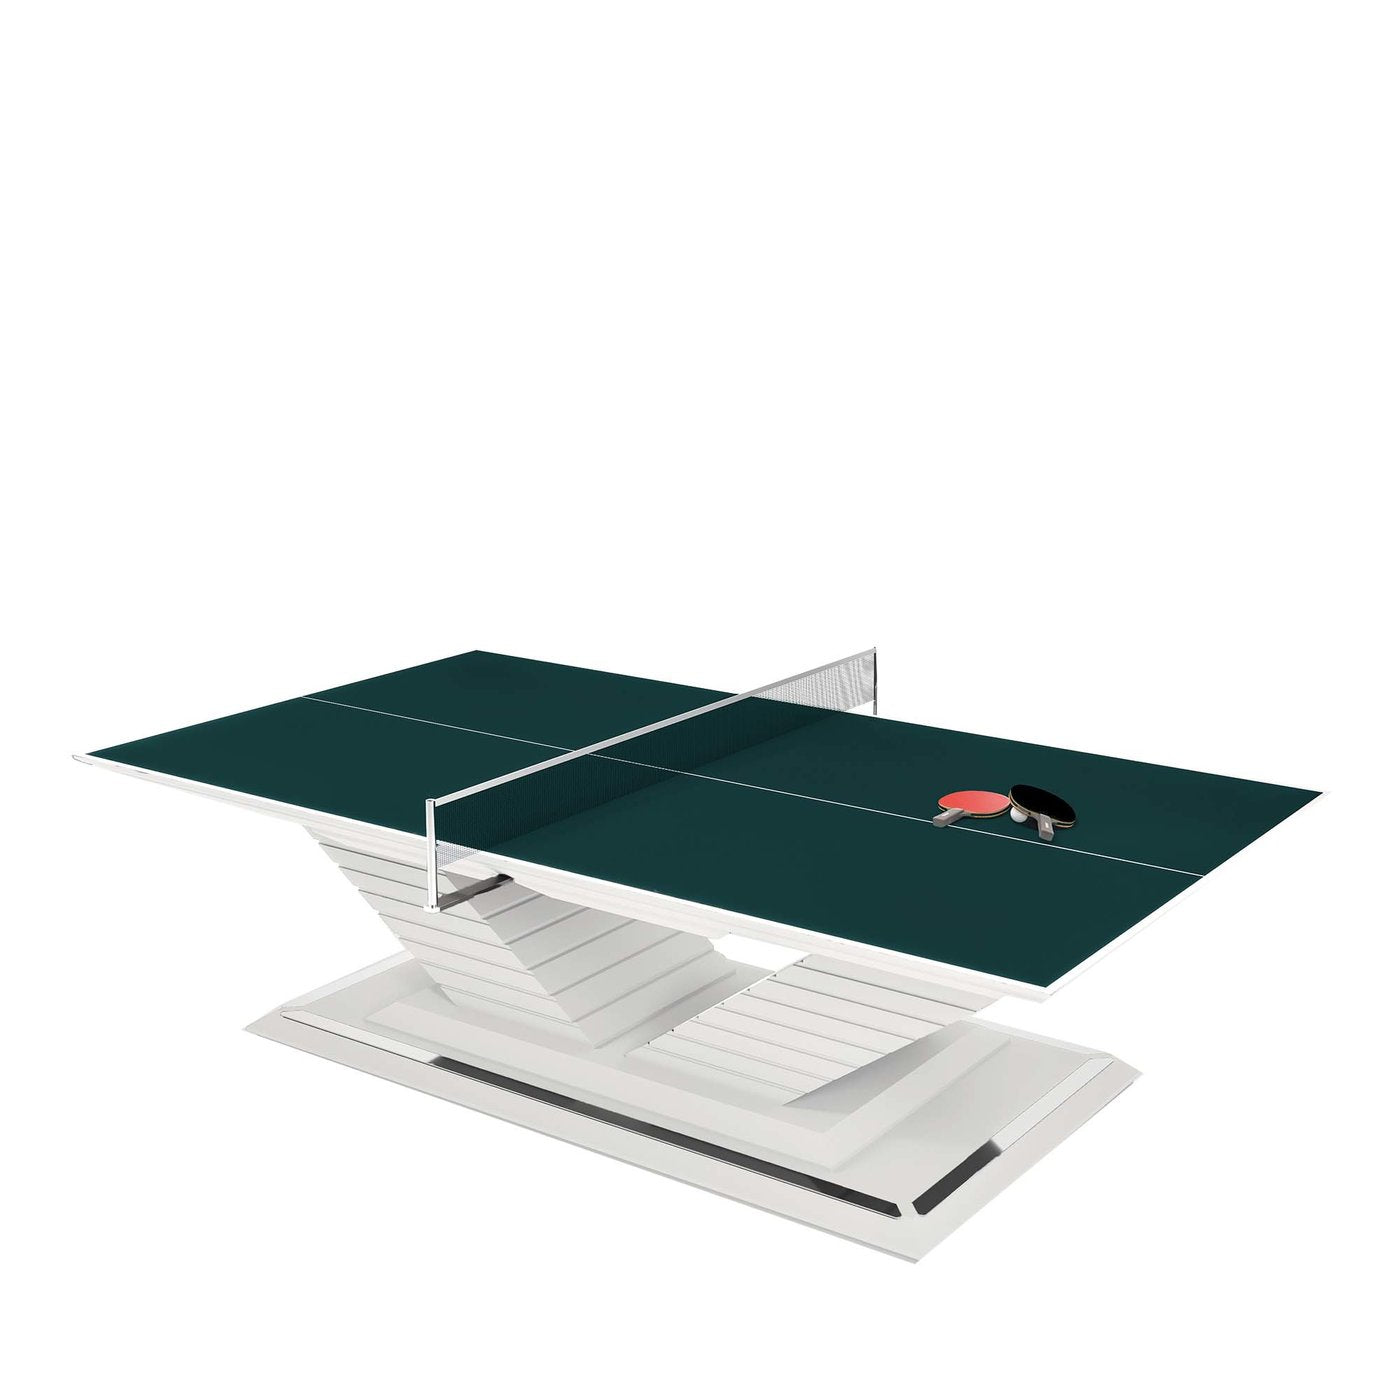 Table de ping-pong Arena par Pino Vismara - Vue principale